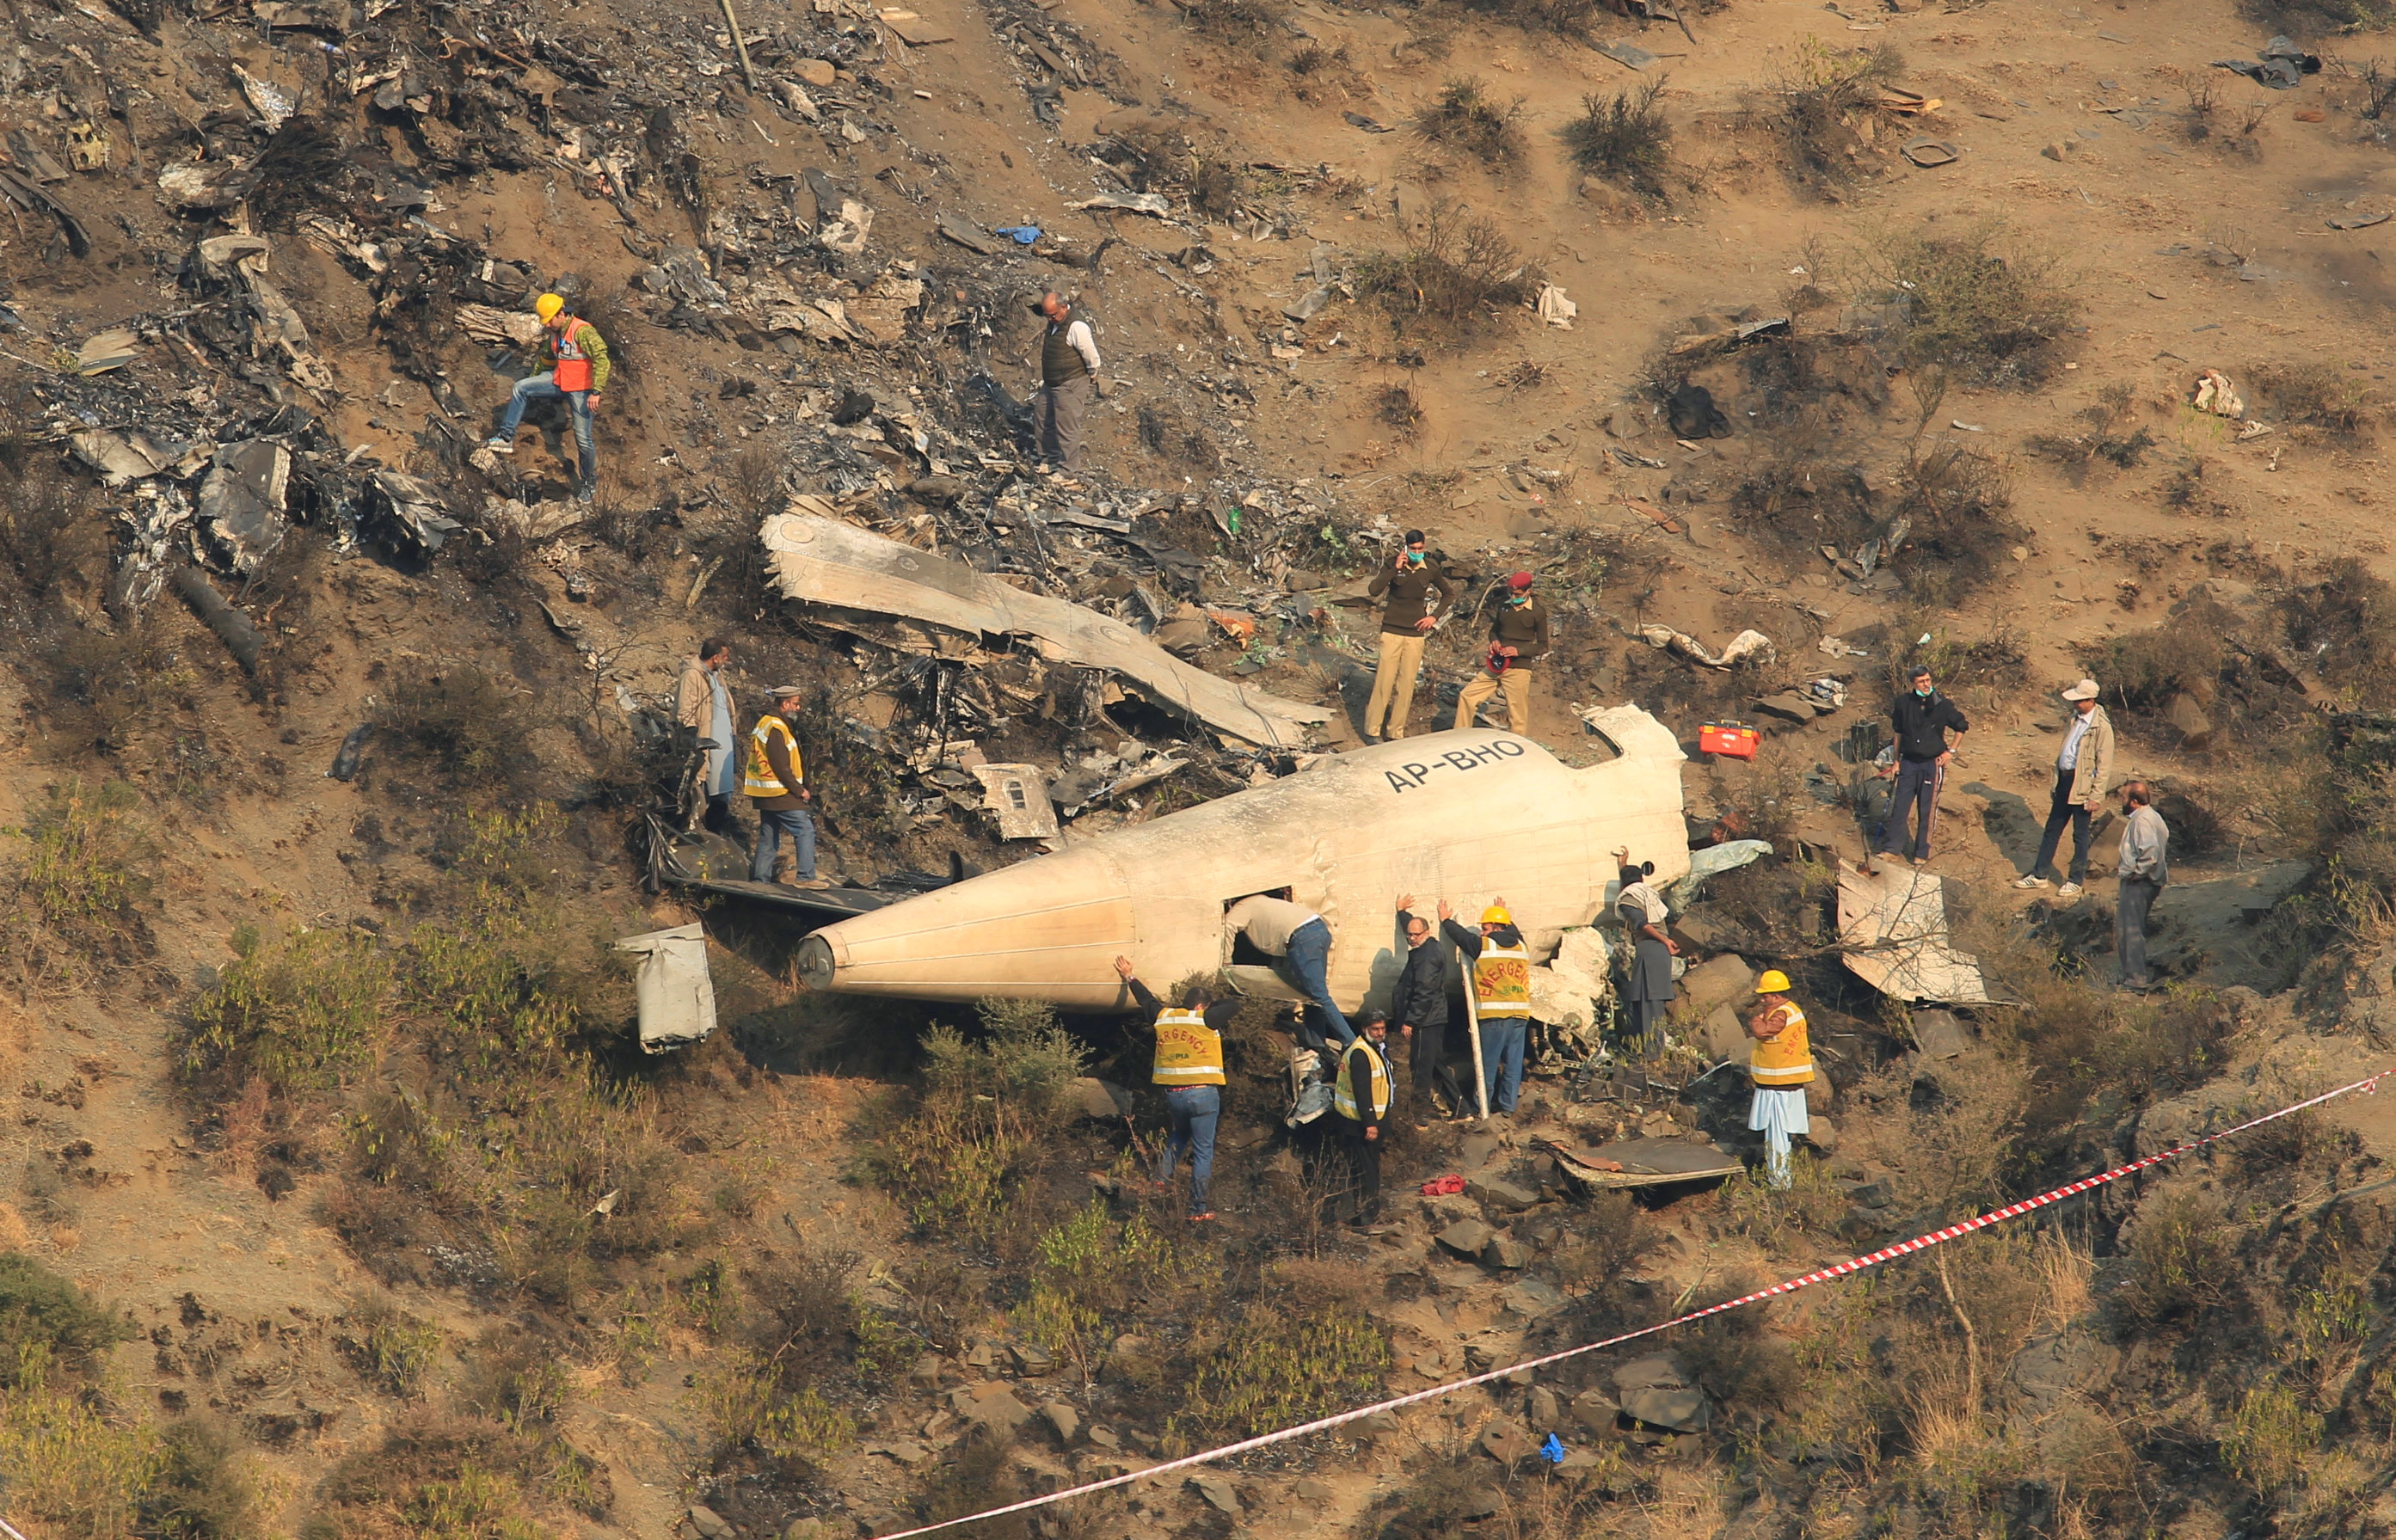 Pakistan mourns 47 killed in air crash, as investigators seek answers